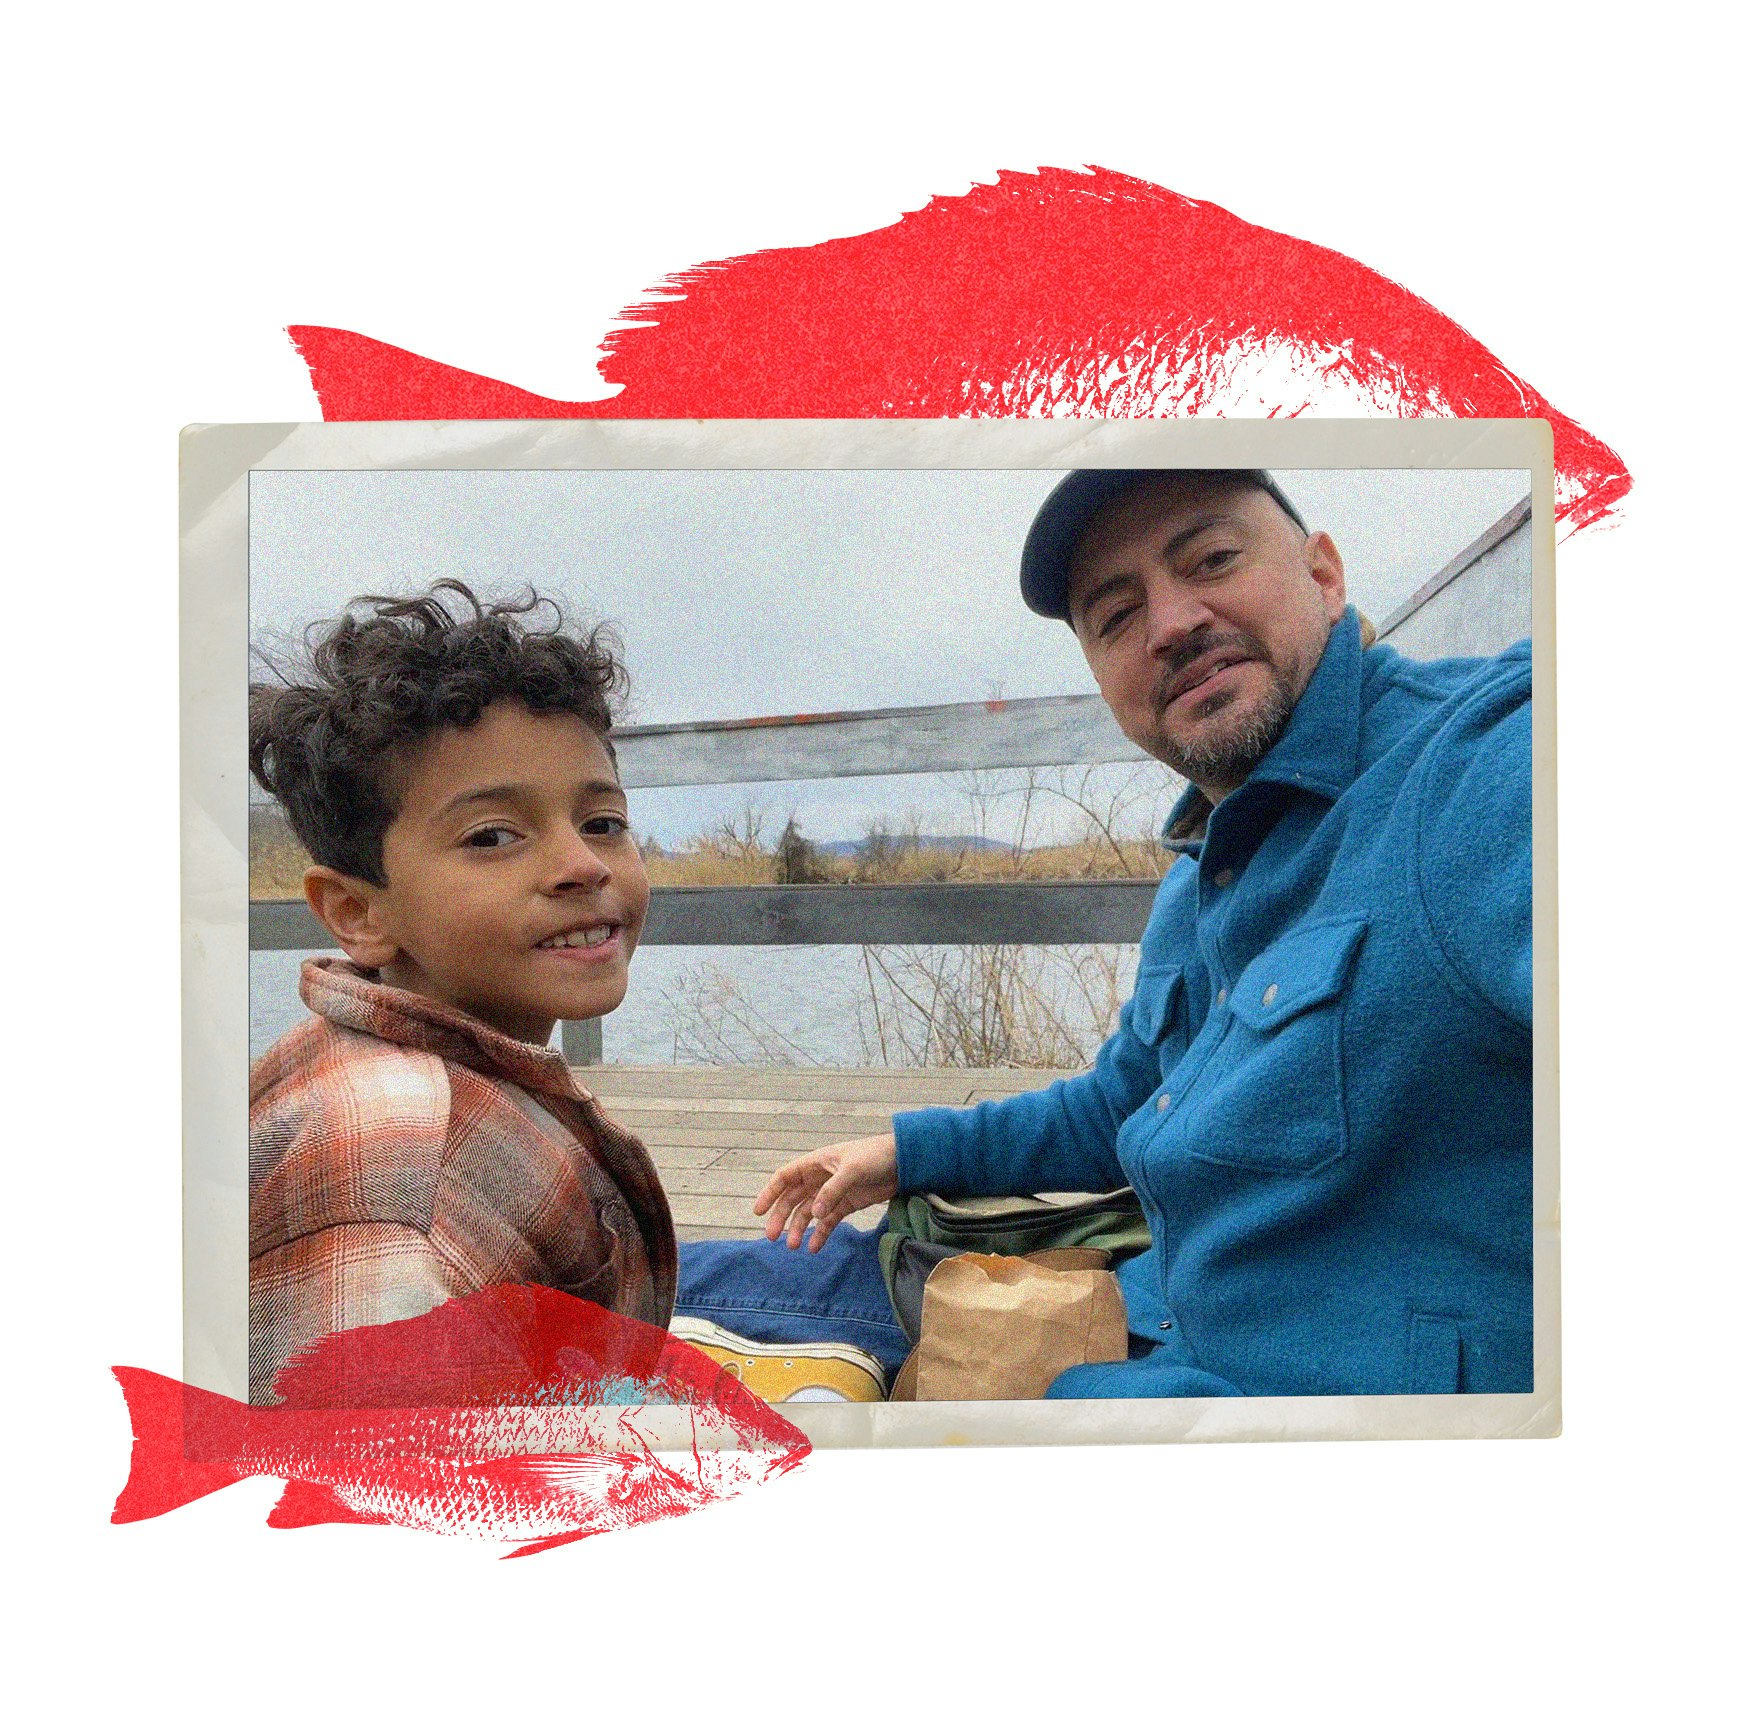 Fishing invention a father-and-son dream come true